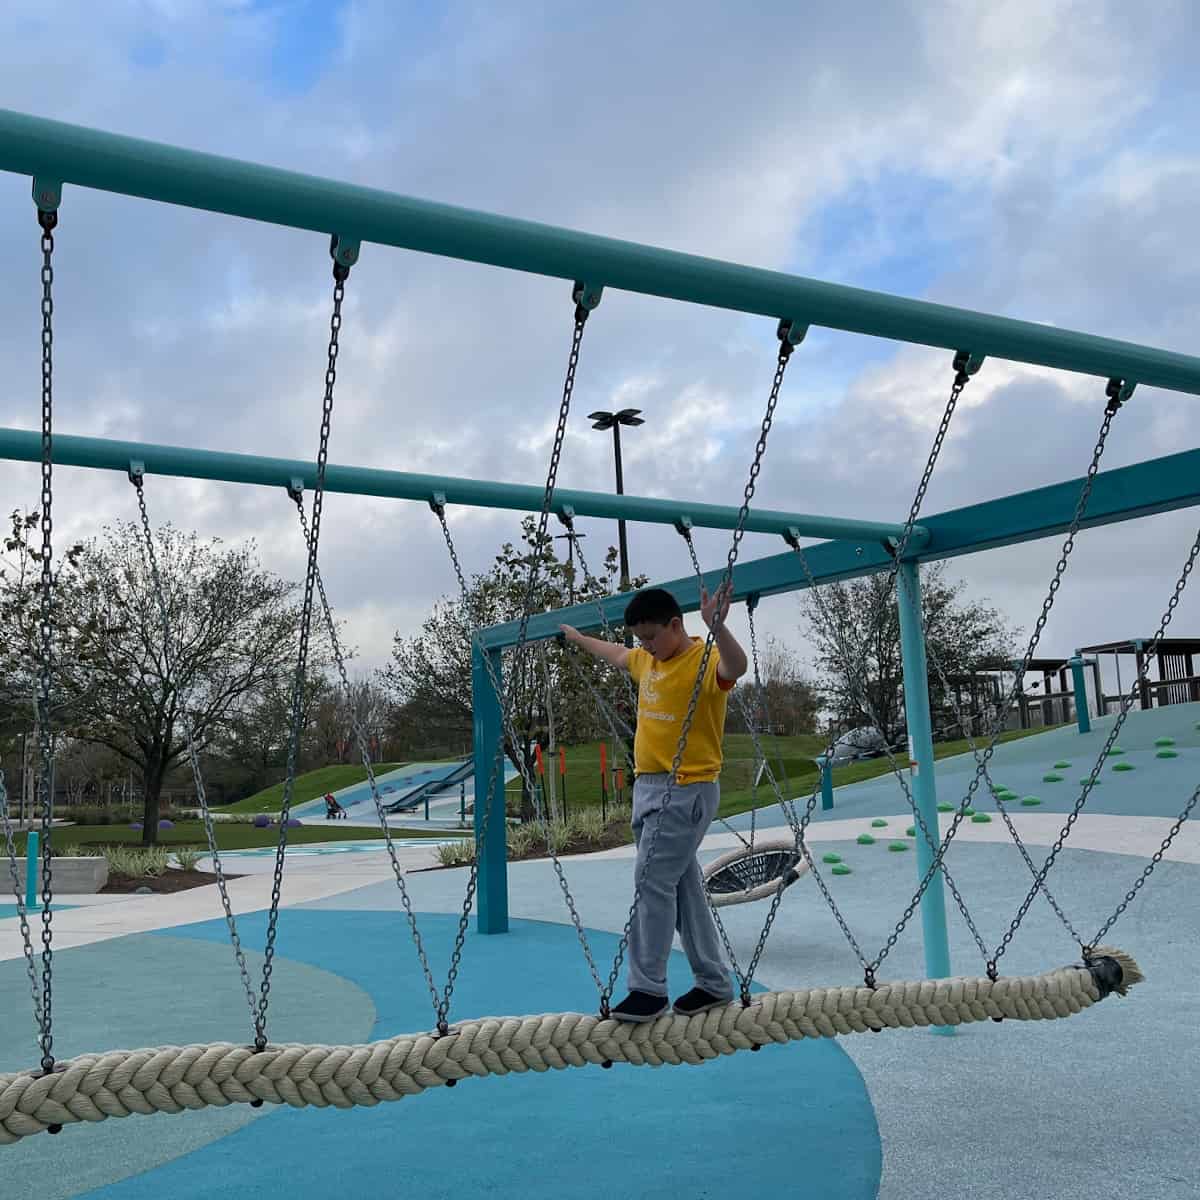 James Driver Park Rope Bridge at Playground